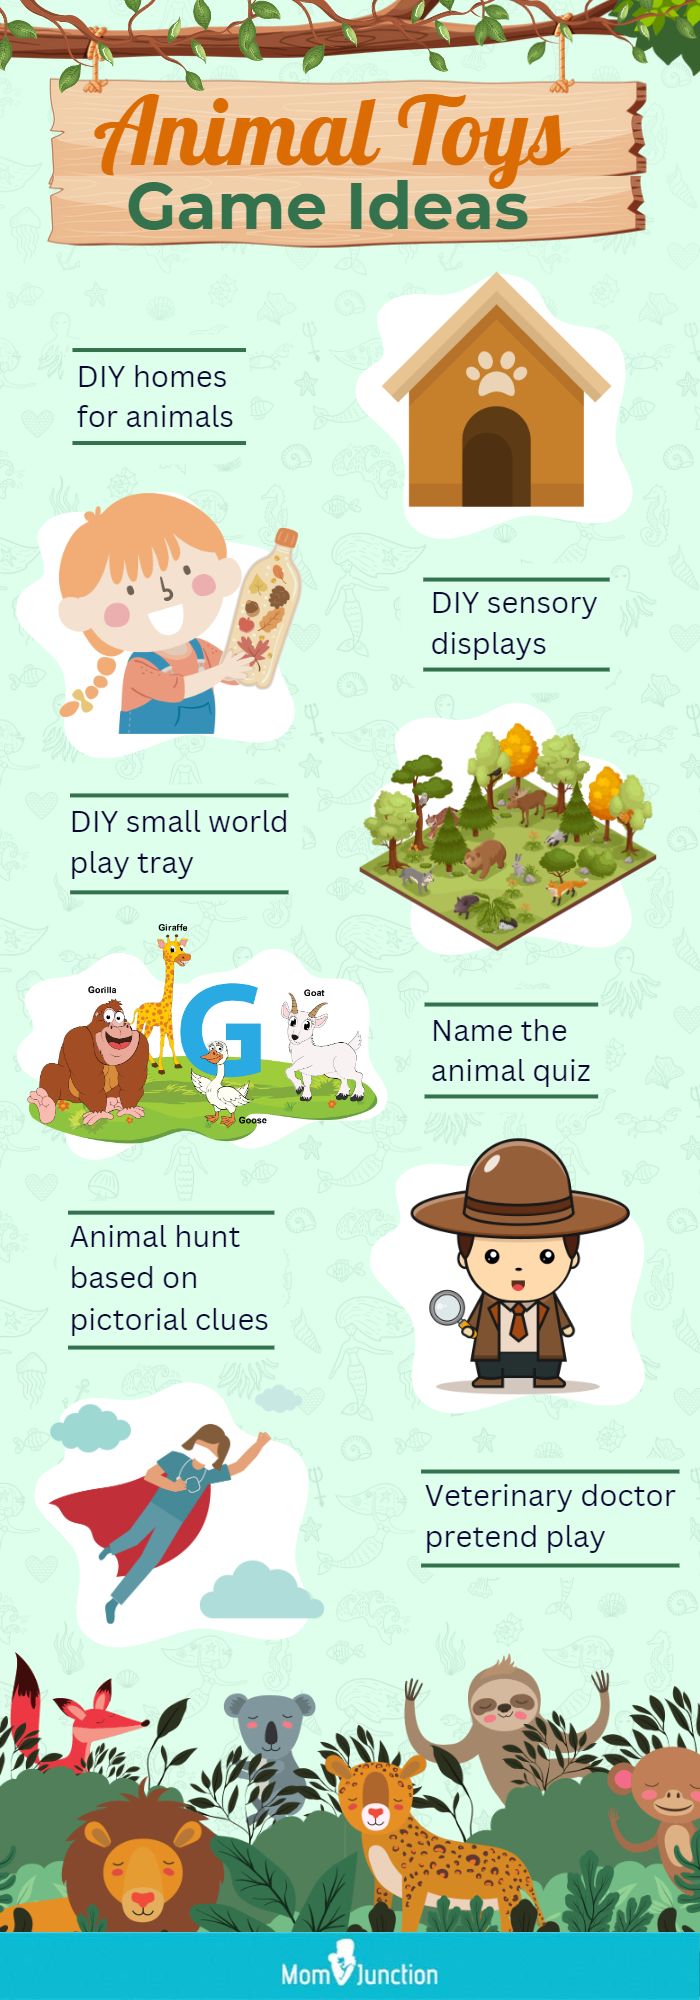 Animal Toys Game Ideas (infographic)